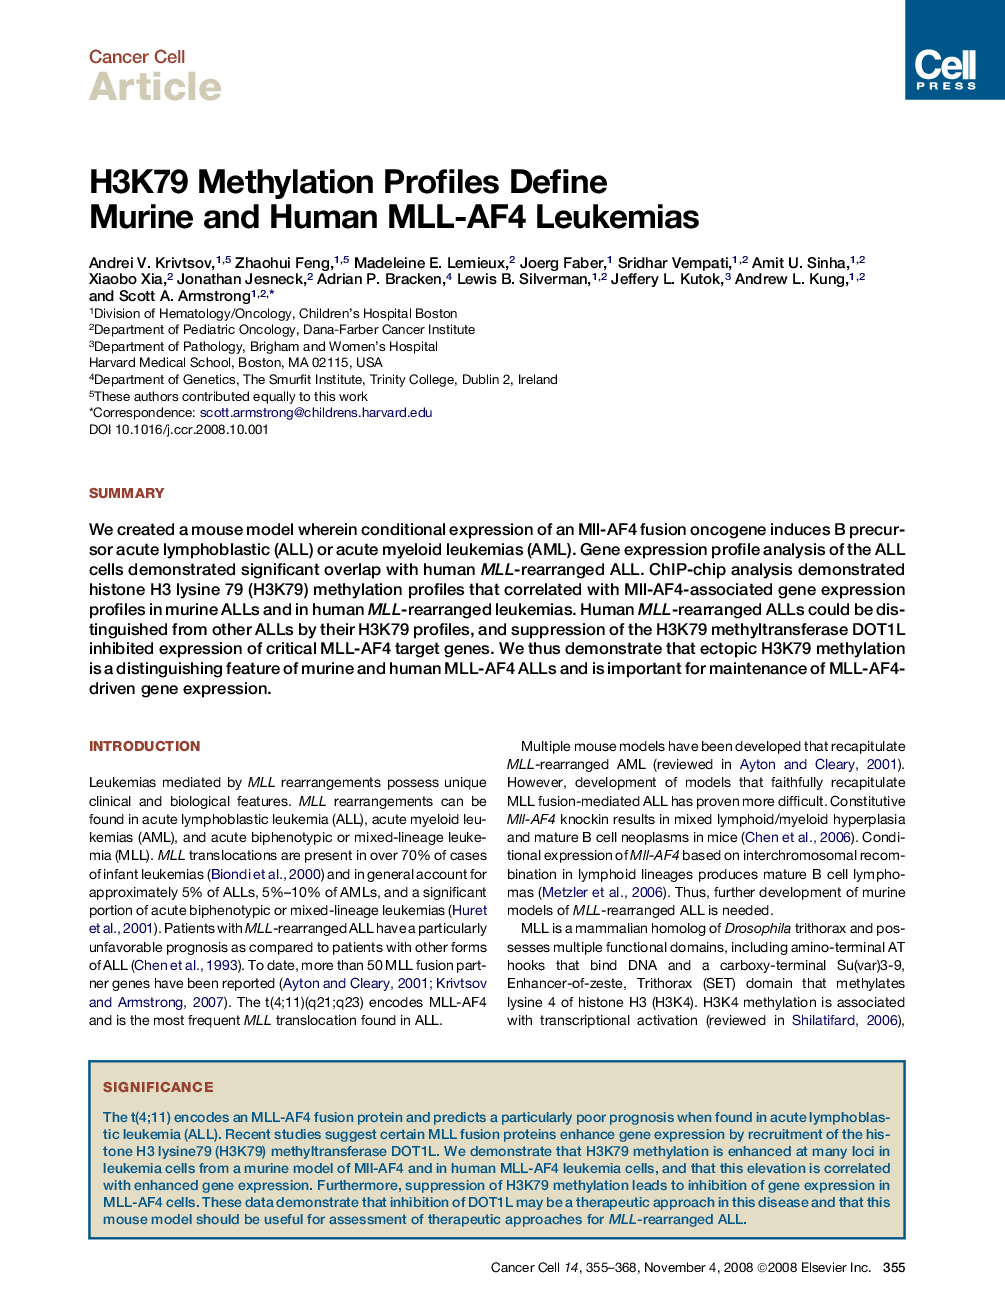 H3K79 Methylation Profiles Define Murine and Human MLL-AF4 Leukemias